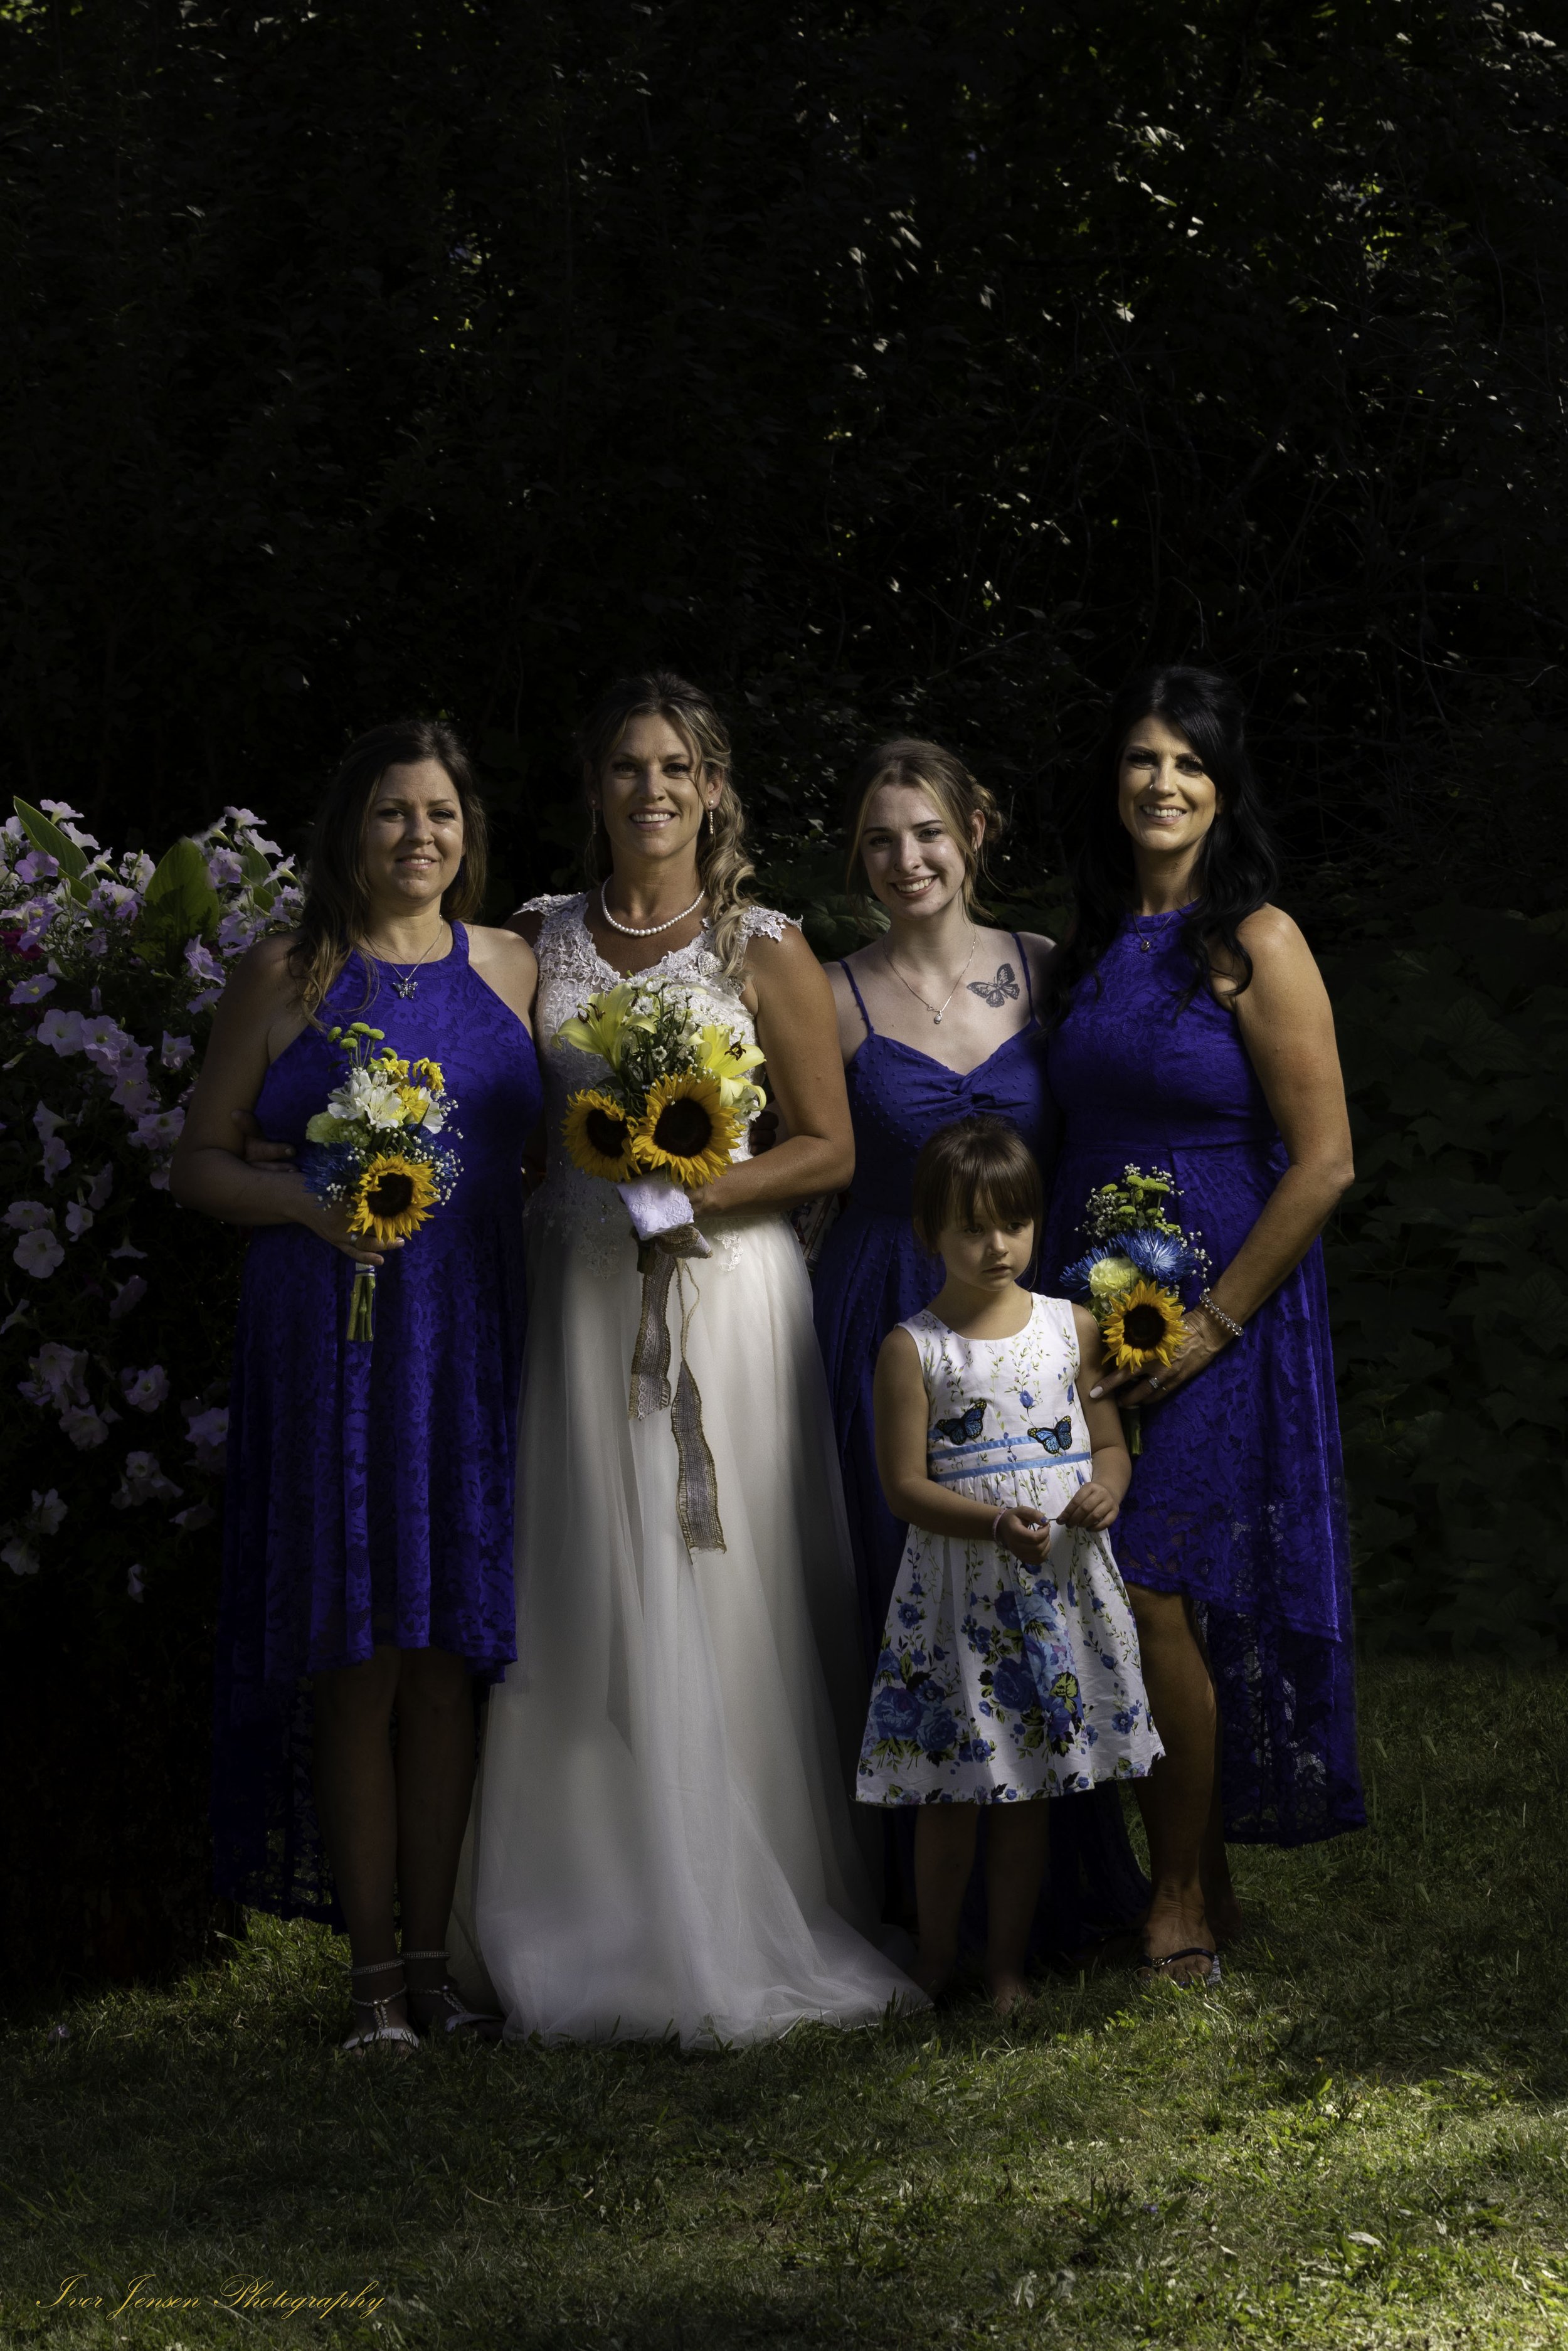 Brides Maids and Bride Godox-Edit.jpg